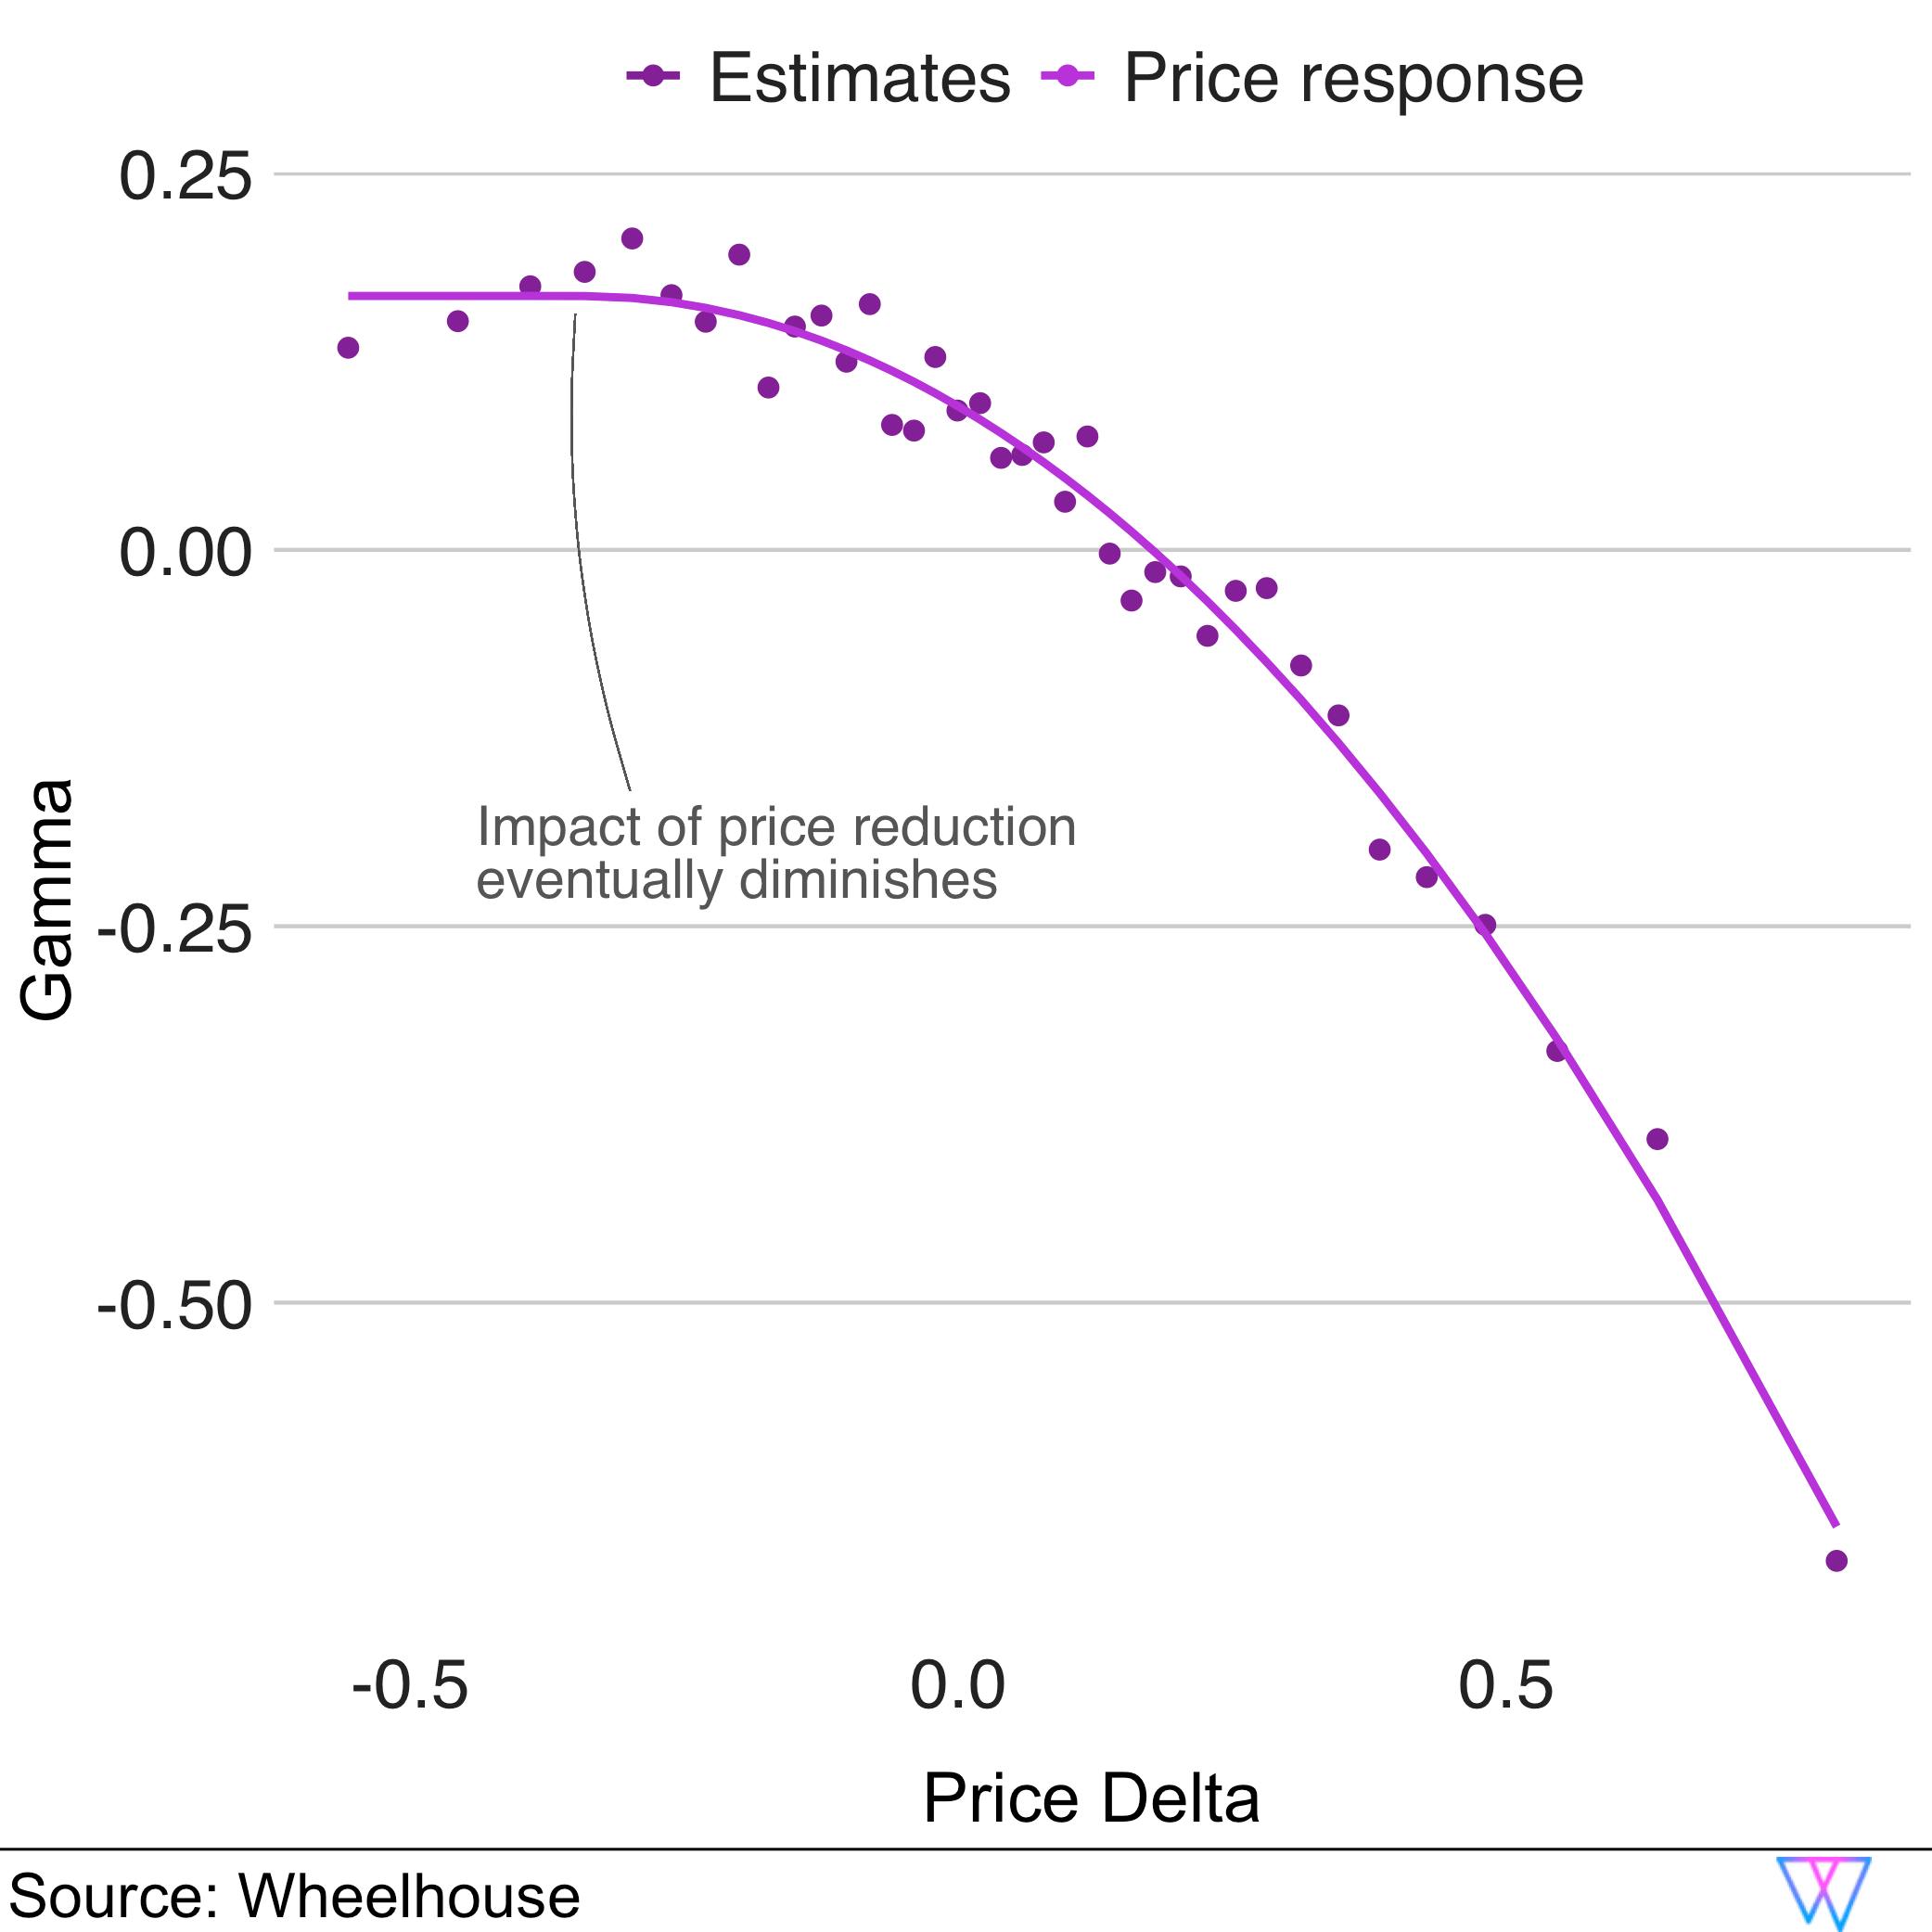 Gamma to price delta in estimates and price response